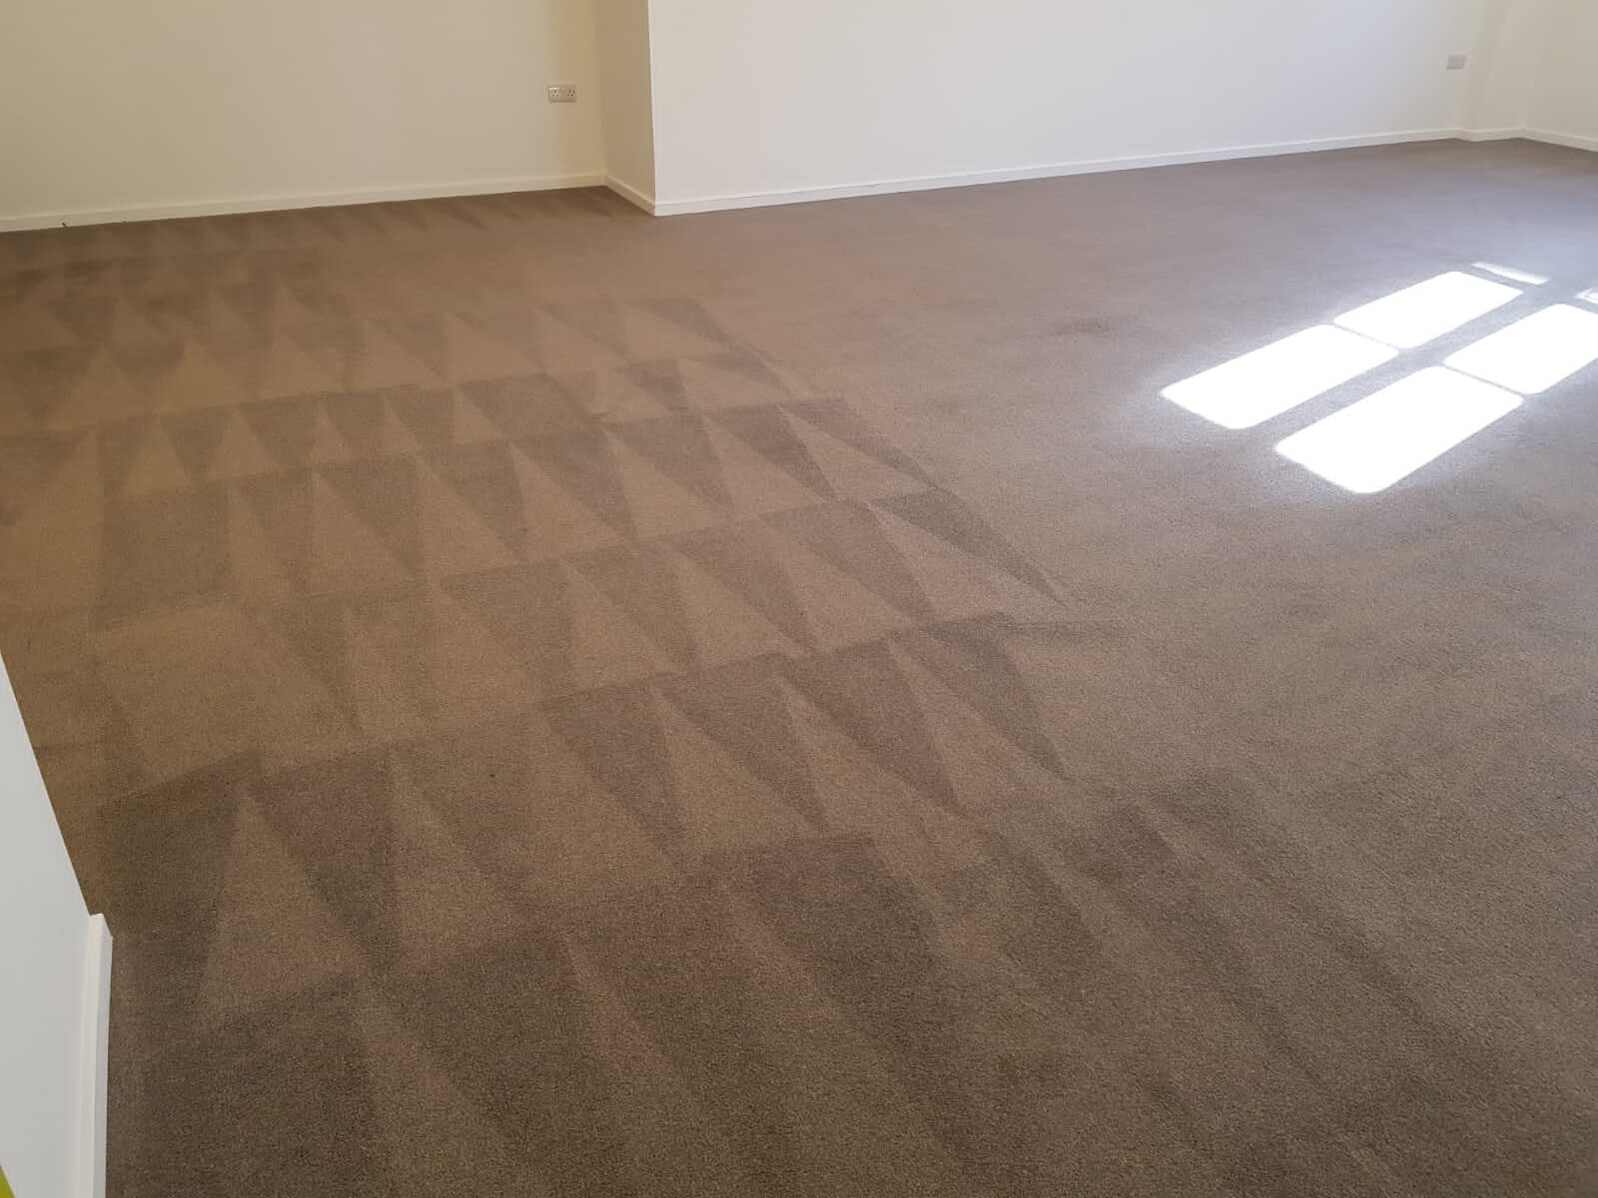 Clean carpets